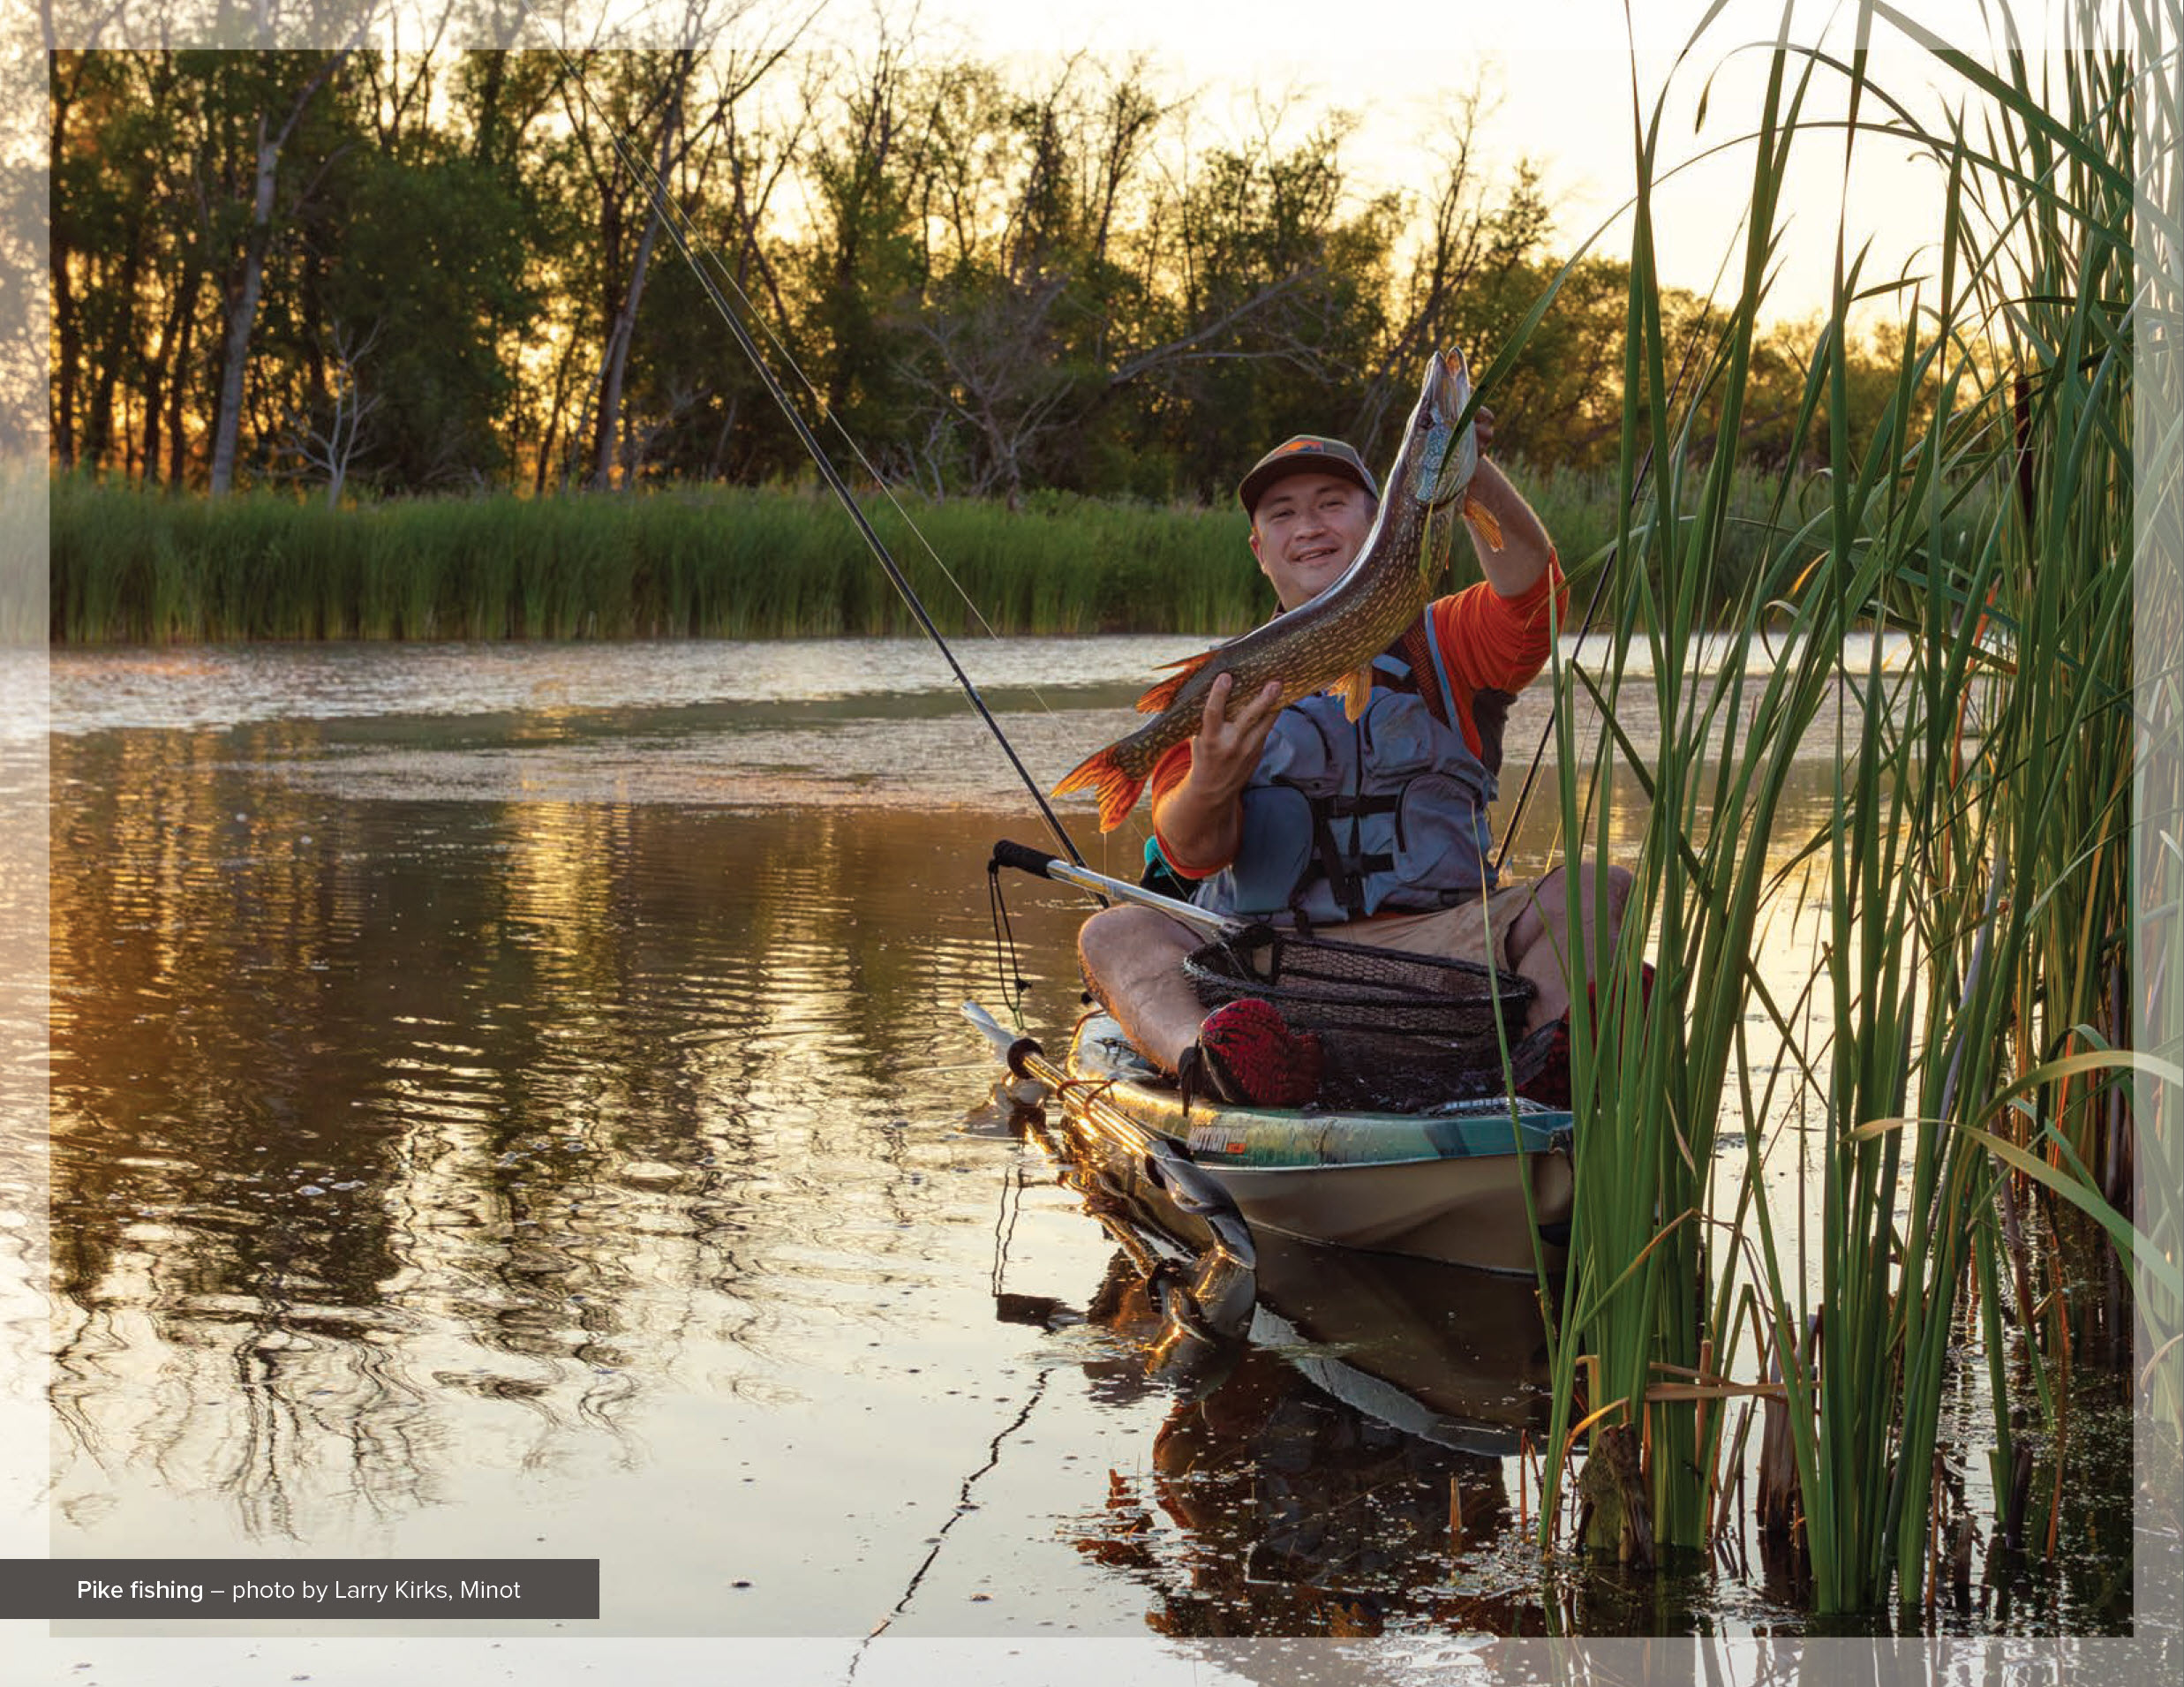 Pike fishing – photo by Larry Kirks, Minot